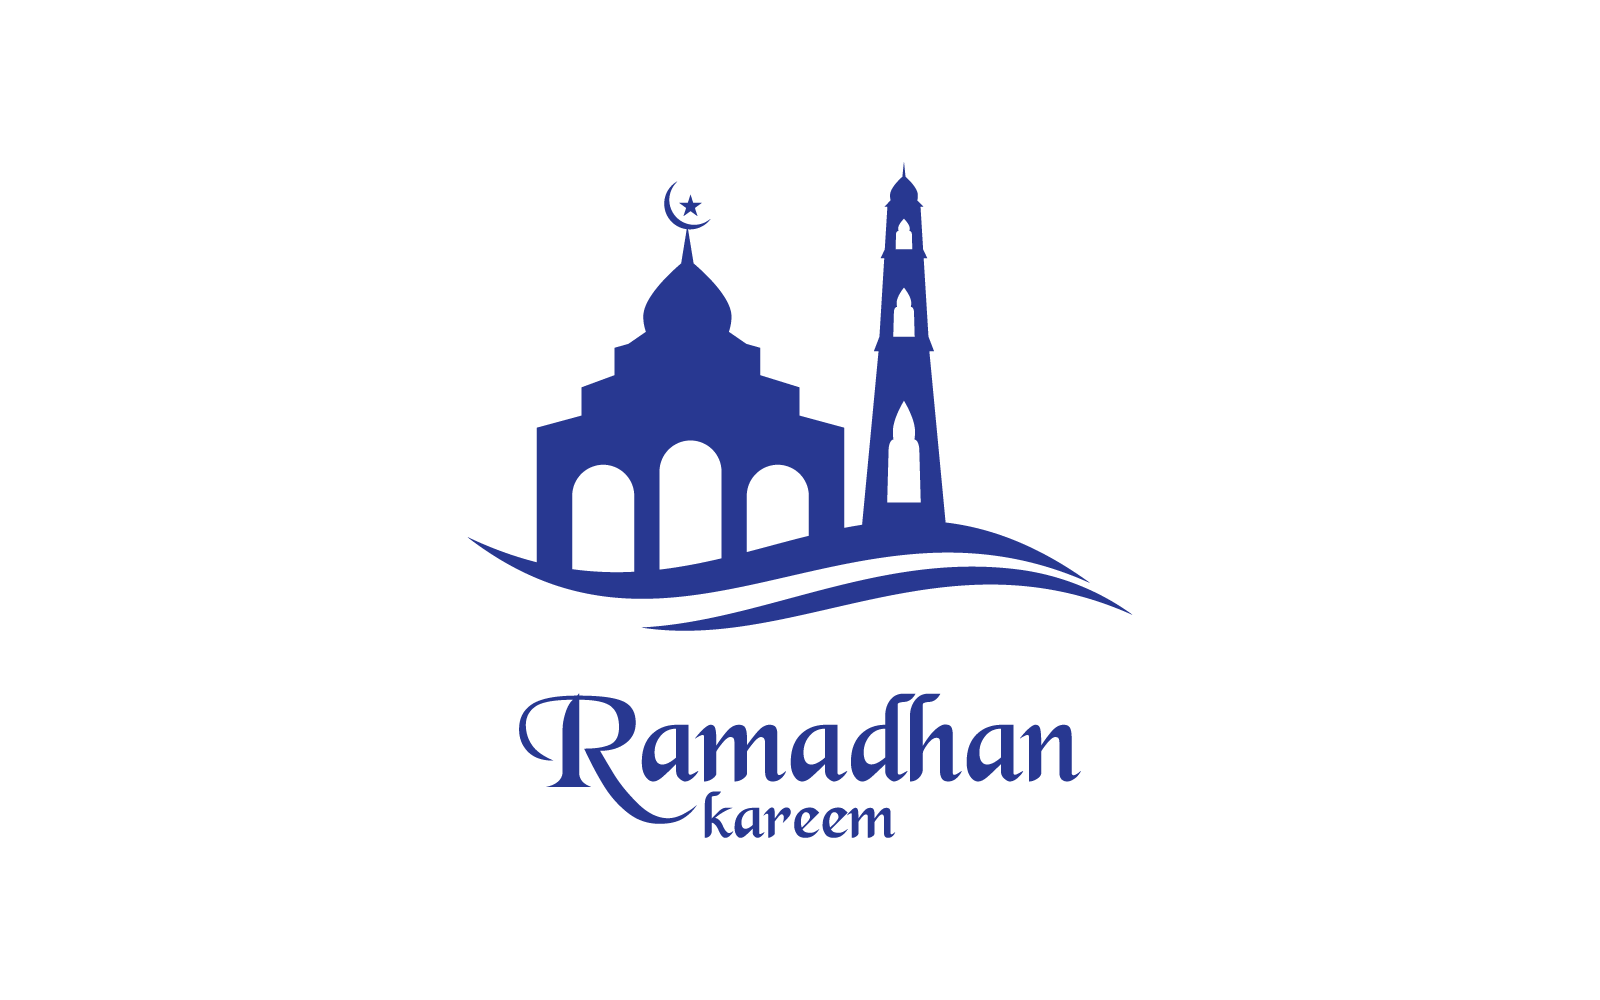 Islamic, Mosque,ramadhan kareem logo vector